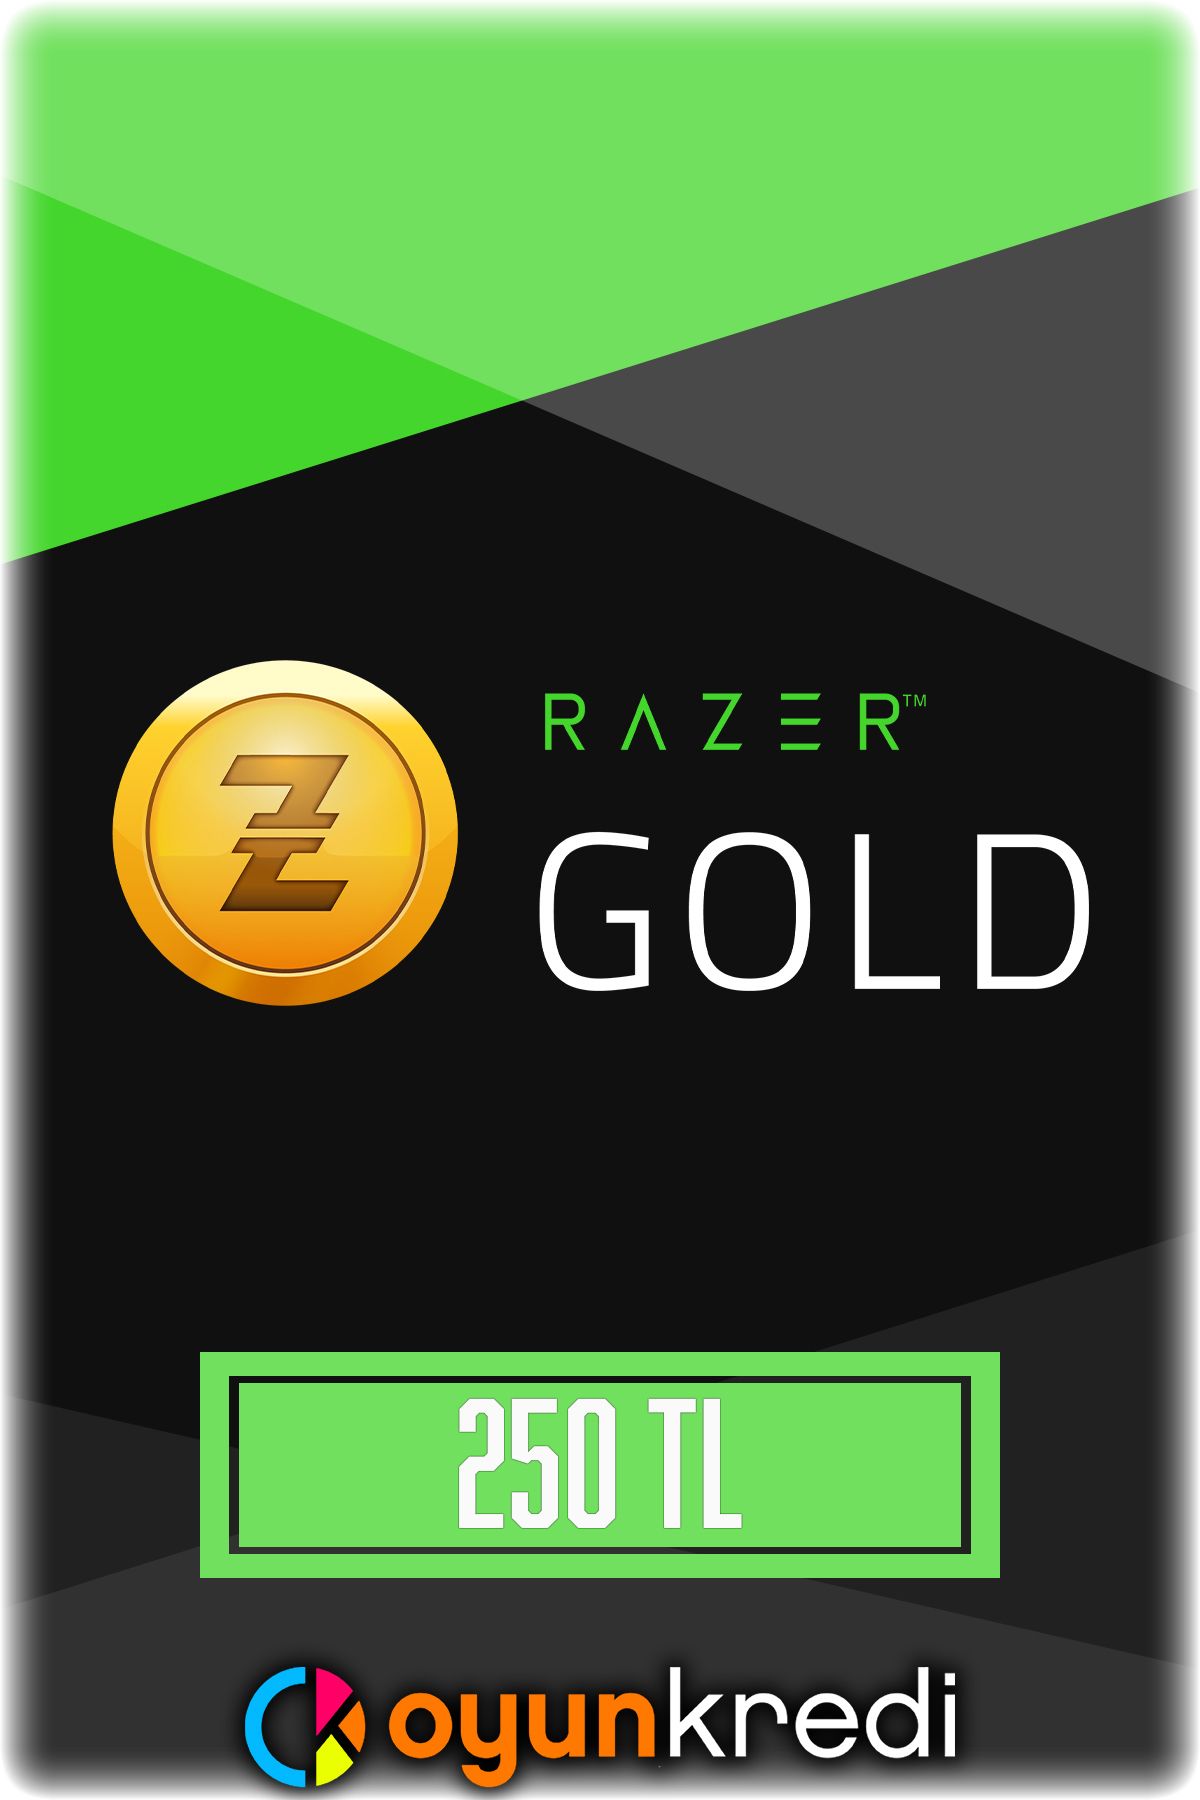 RAZER Gold Pin 250 TL